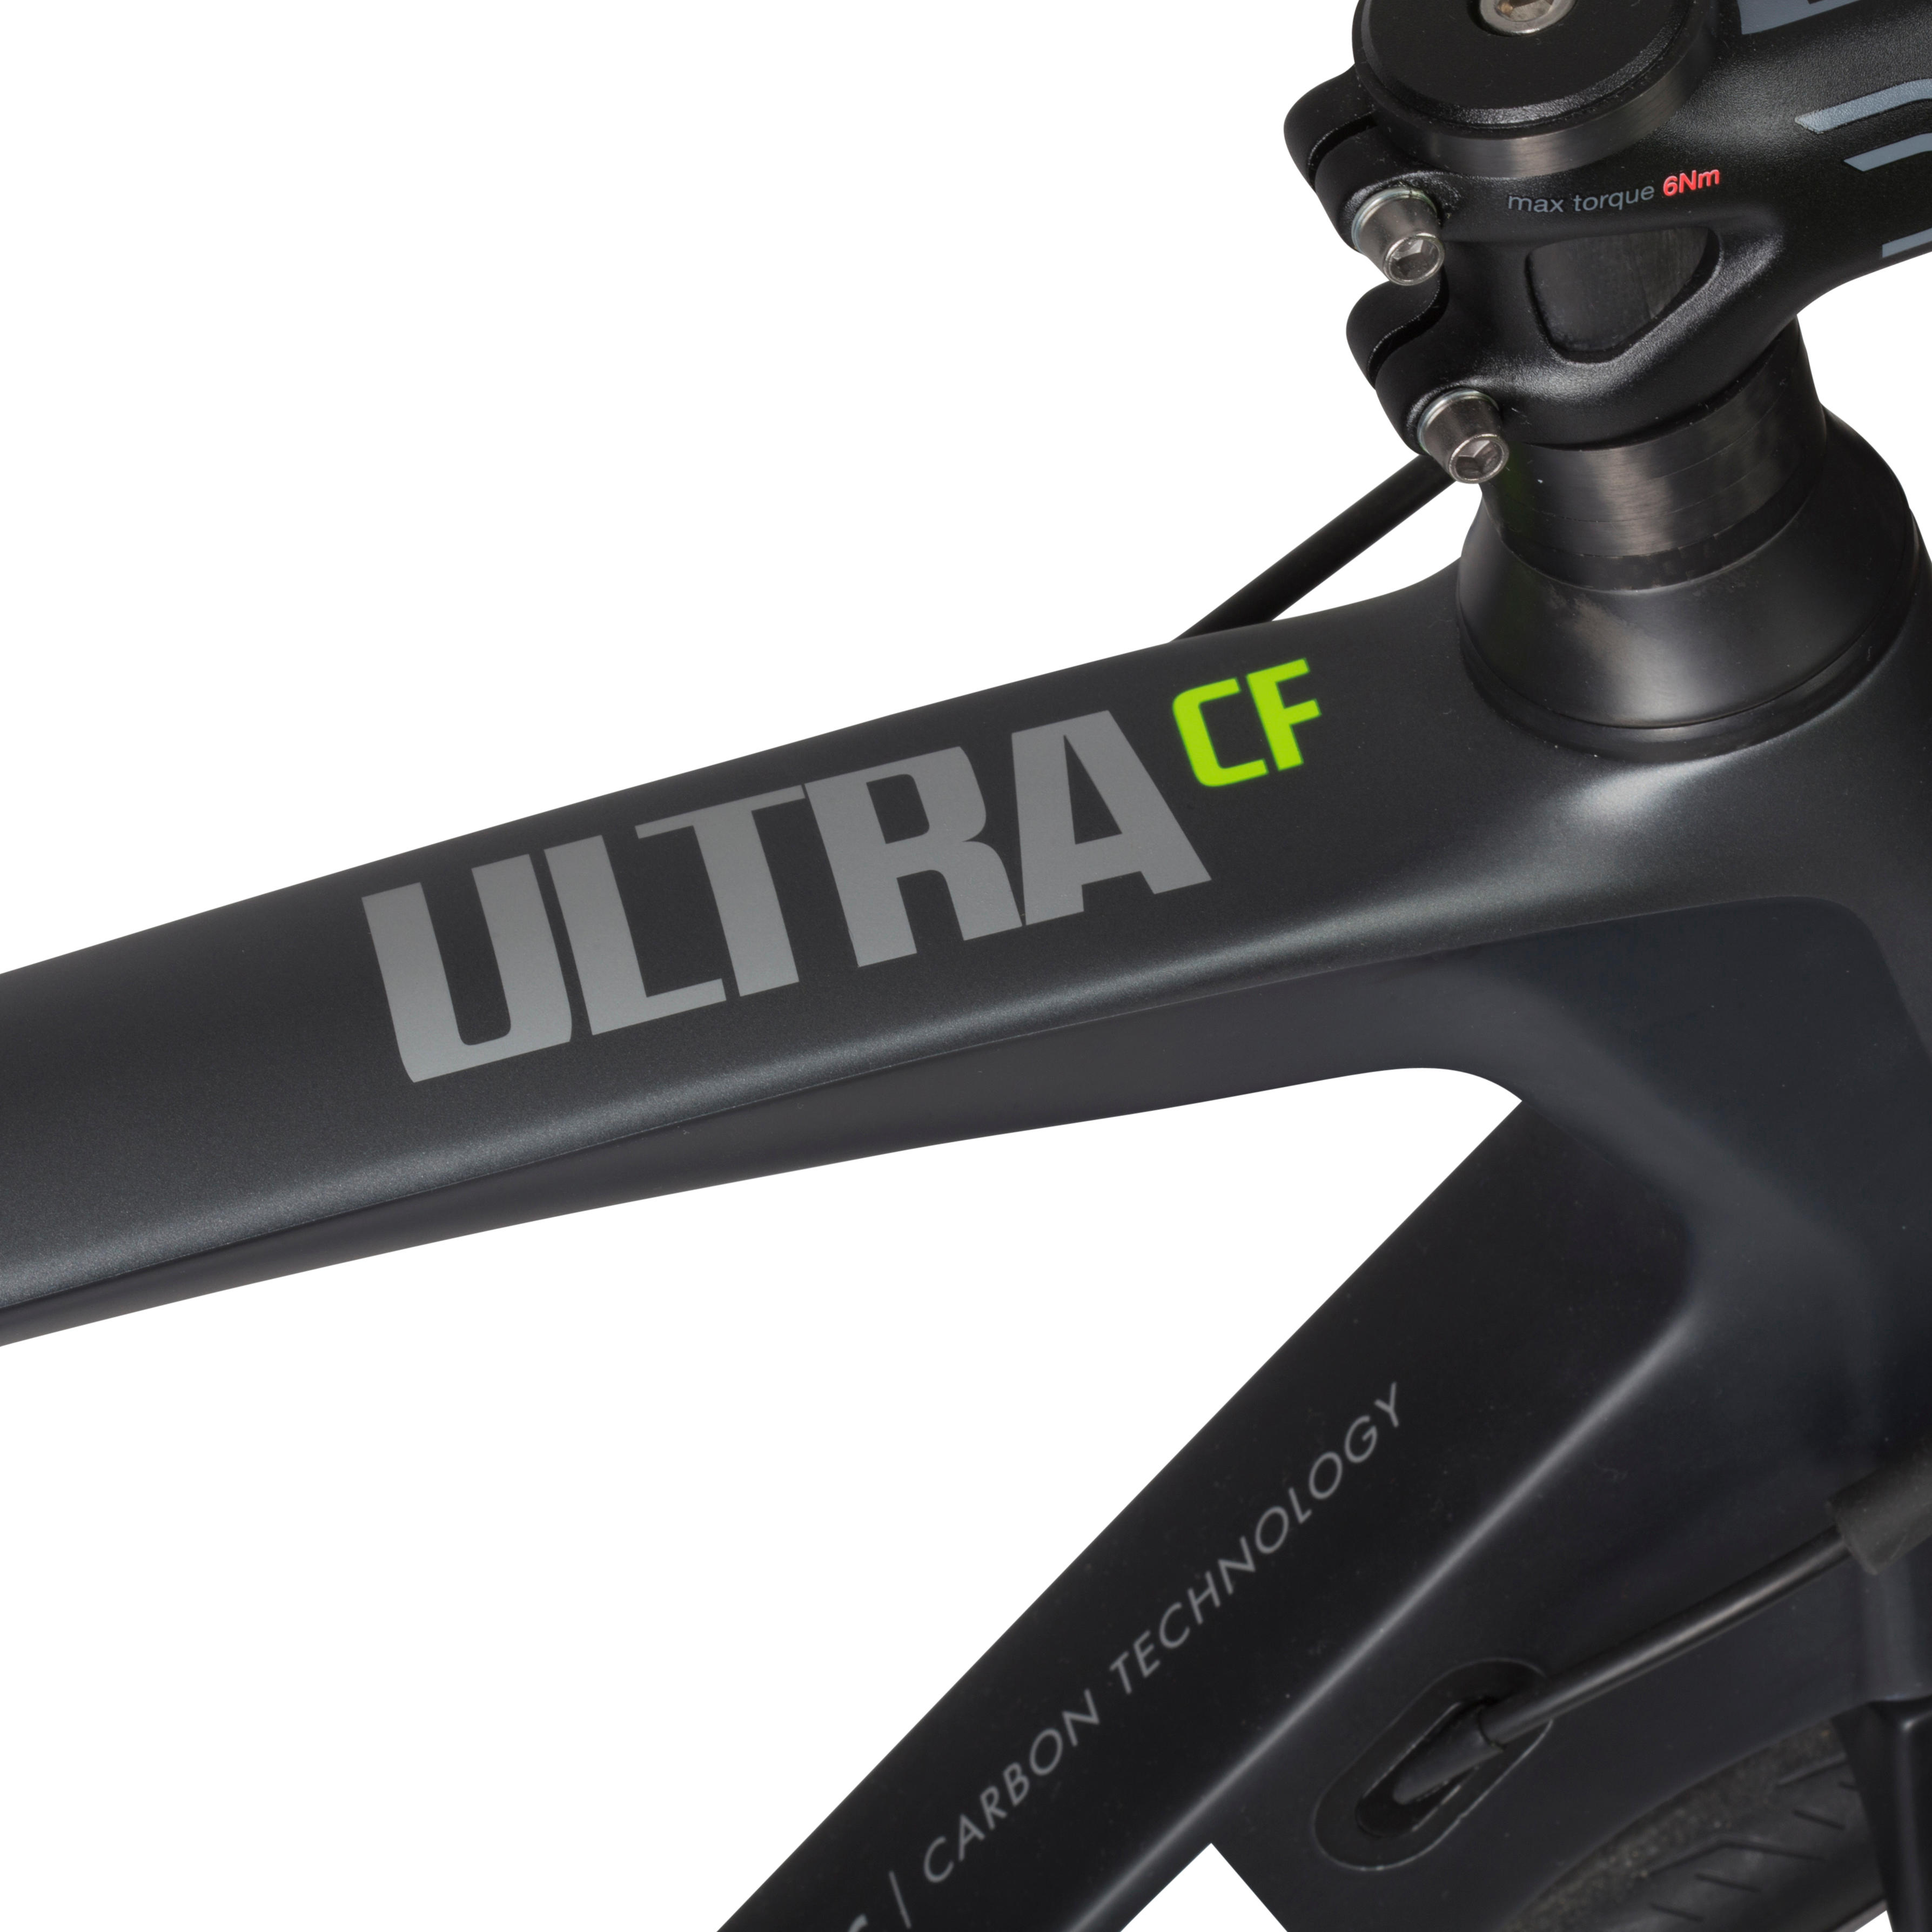 ultra 900 carbon frame road bike